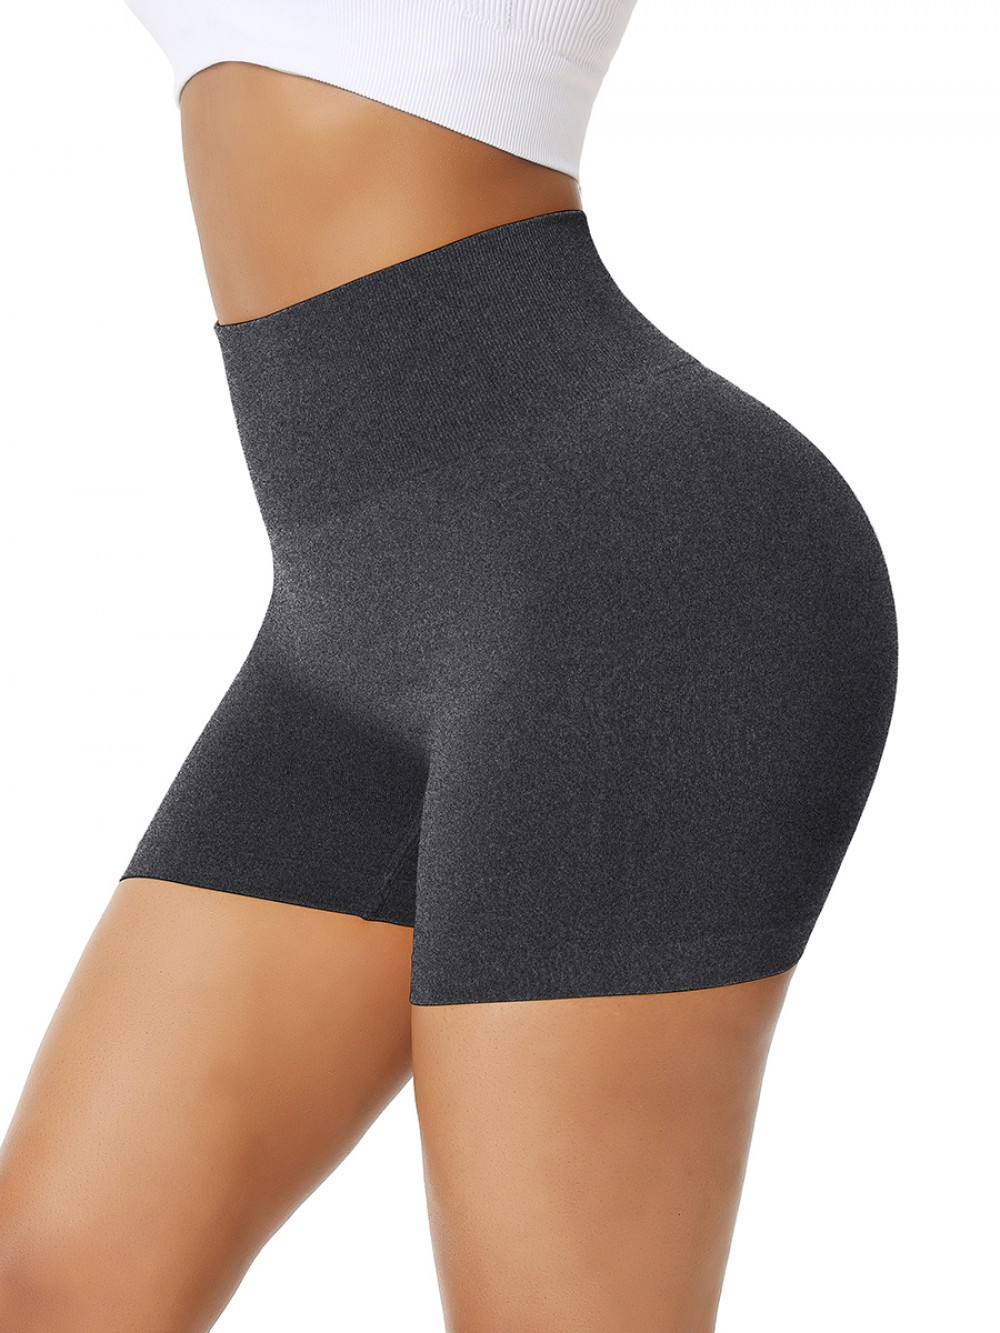 Stretchable Black High Waist Gym Shorts Solid Color Newest Fashion